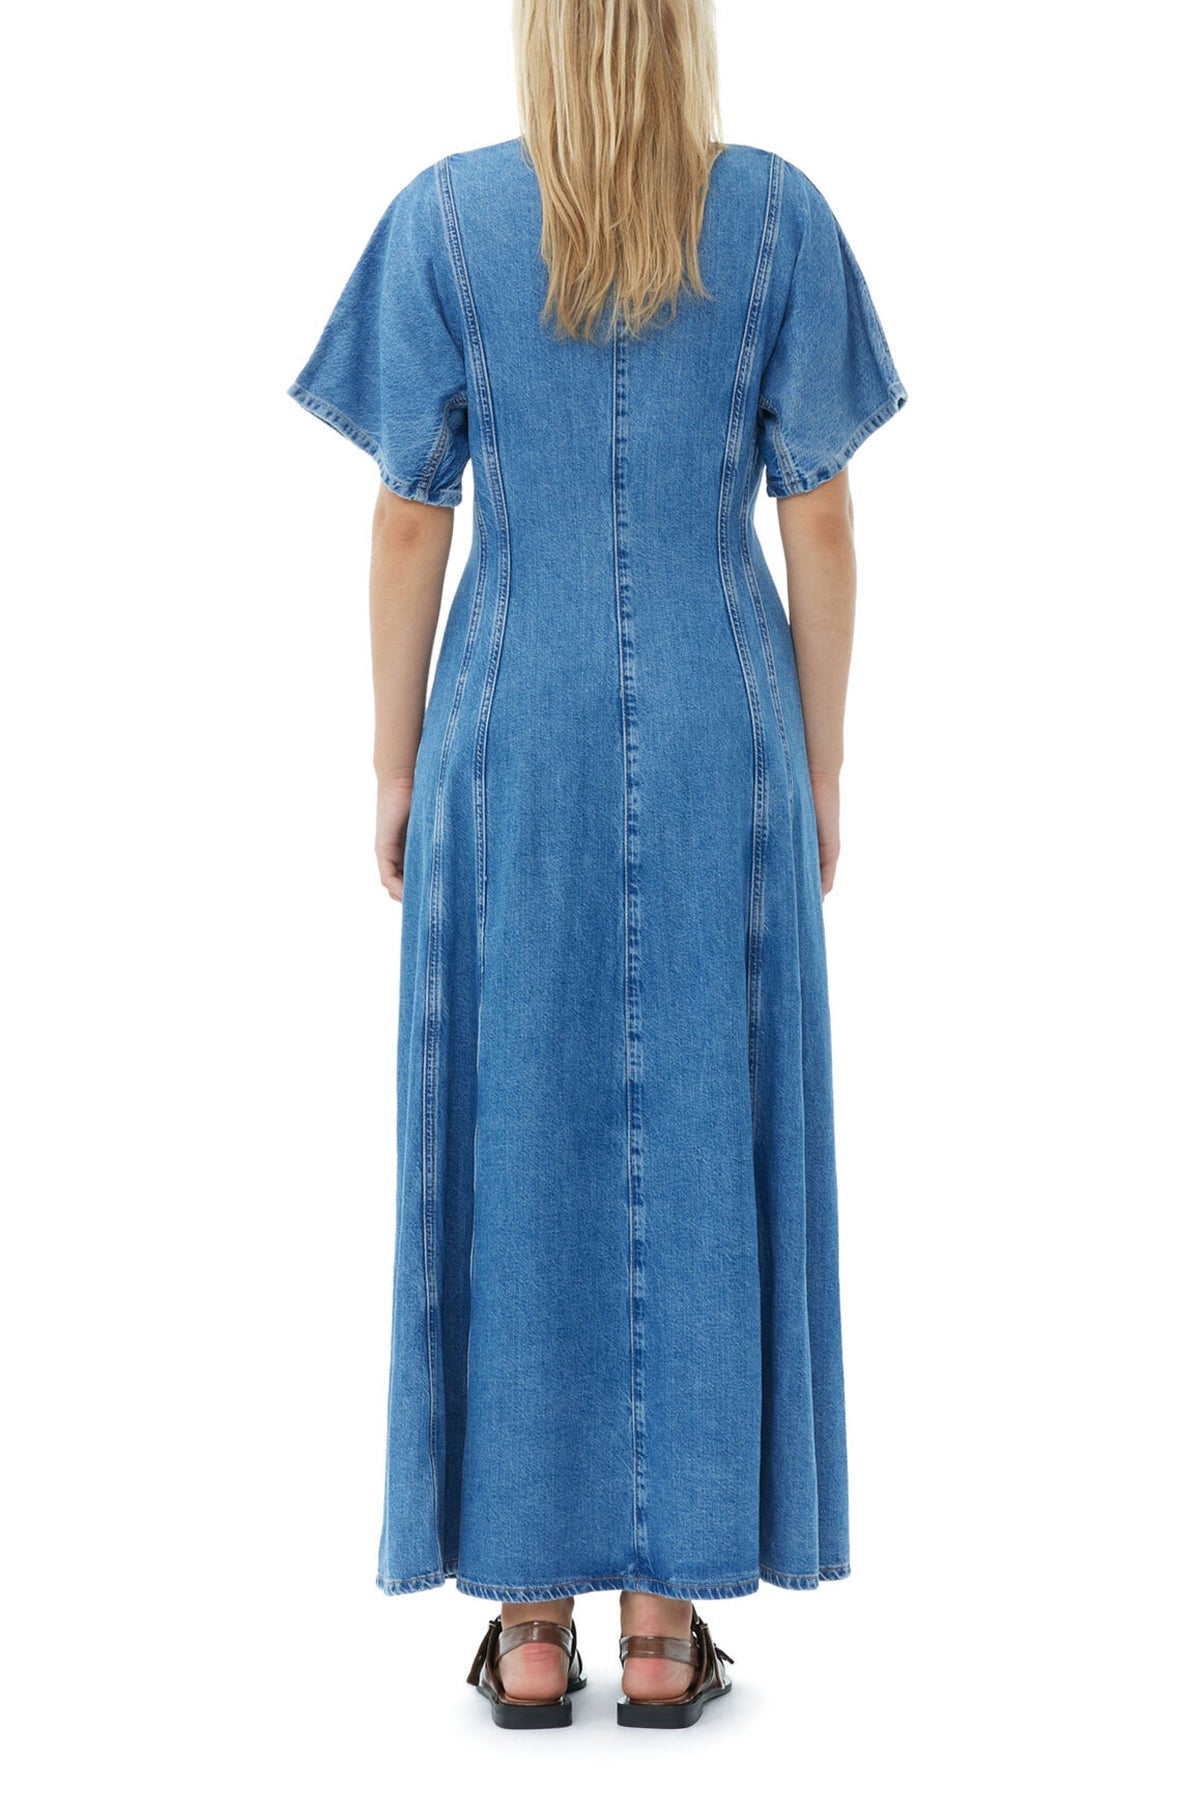 Future Denim Maxi Dress in Mid Blue Stone - shop-olivia.com